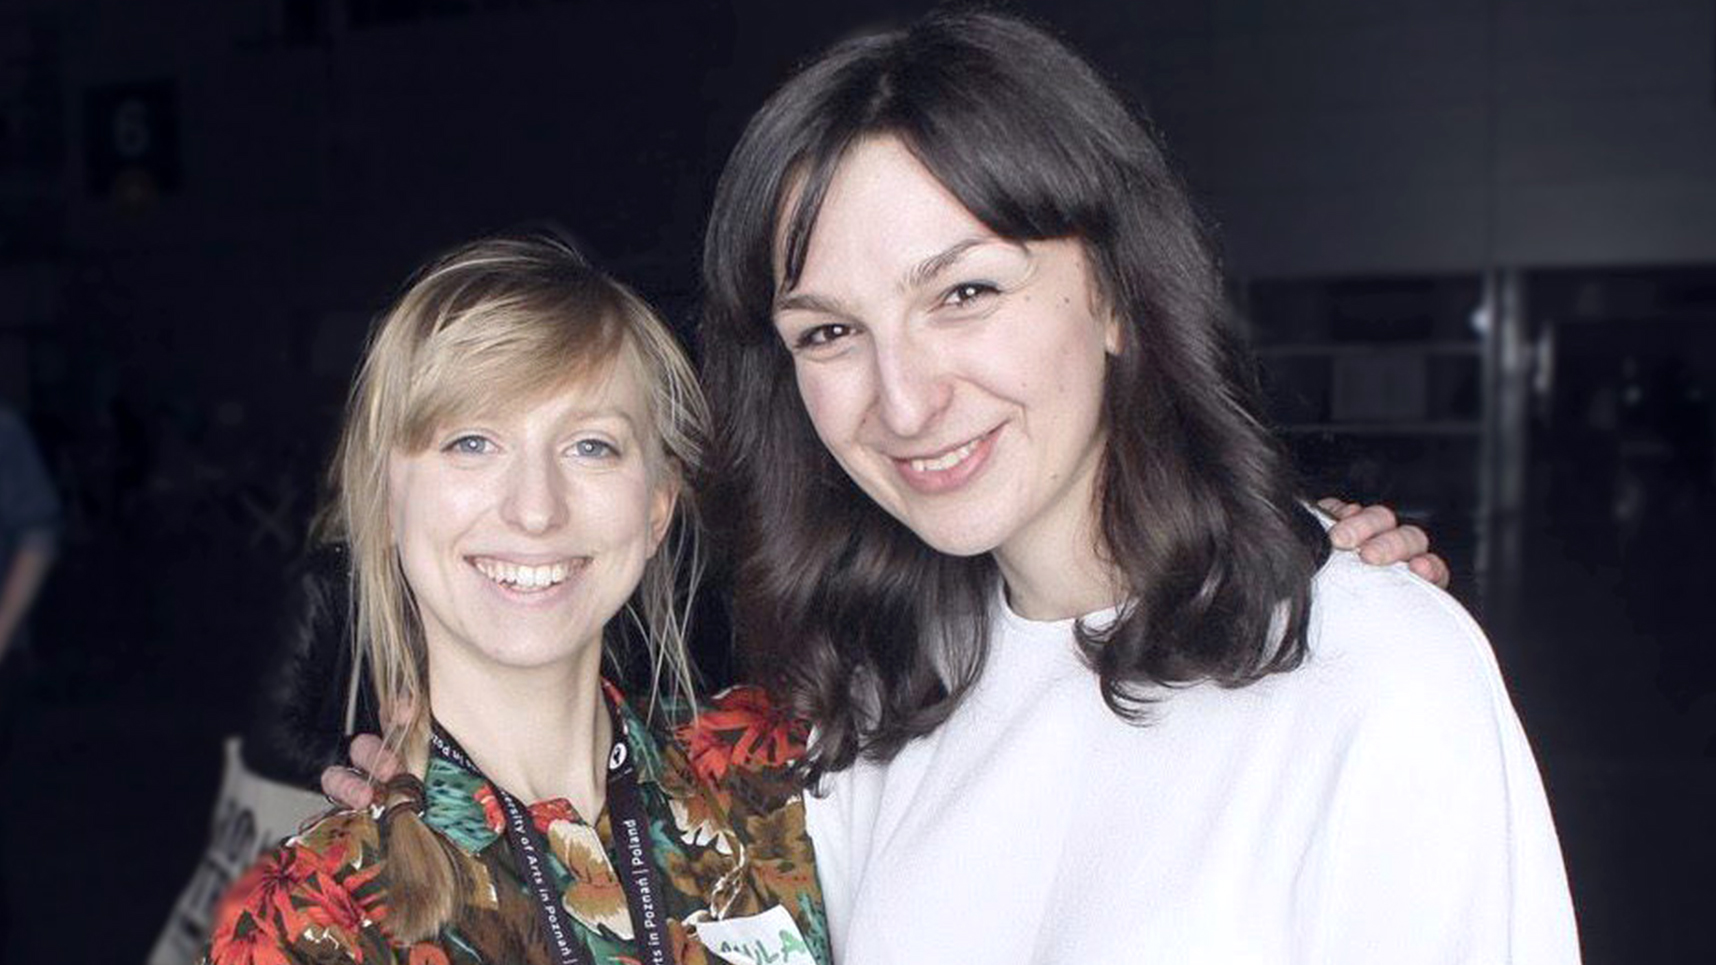 Paula Kacprzak (left) and Olga Rafalska